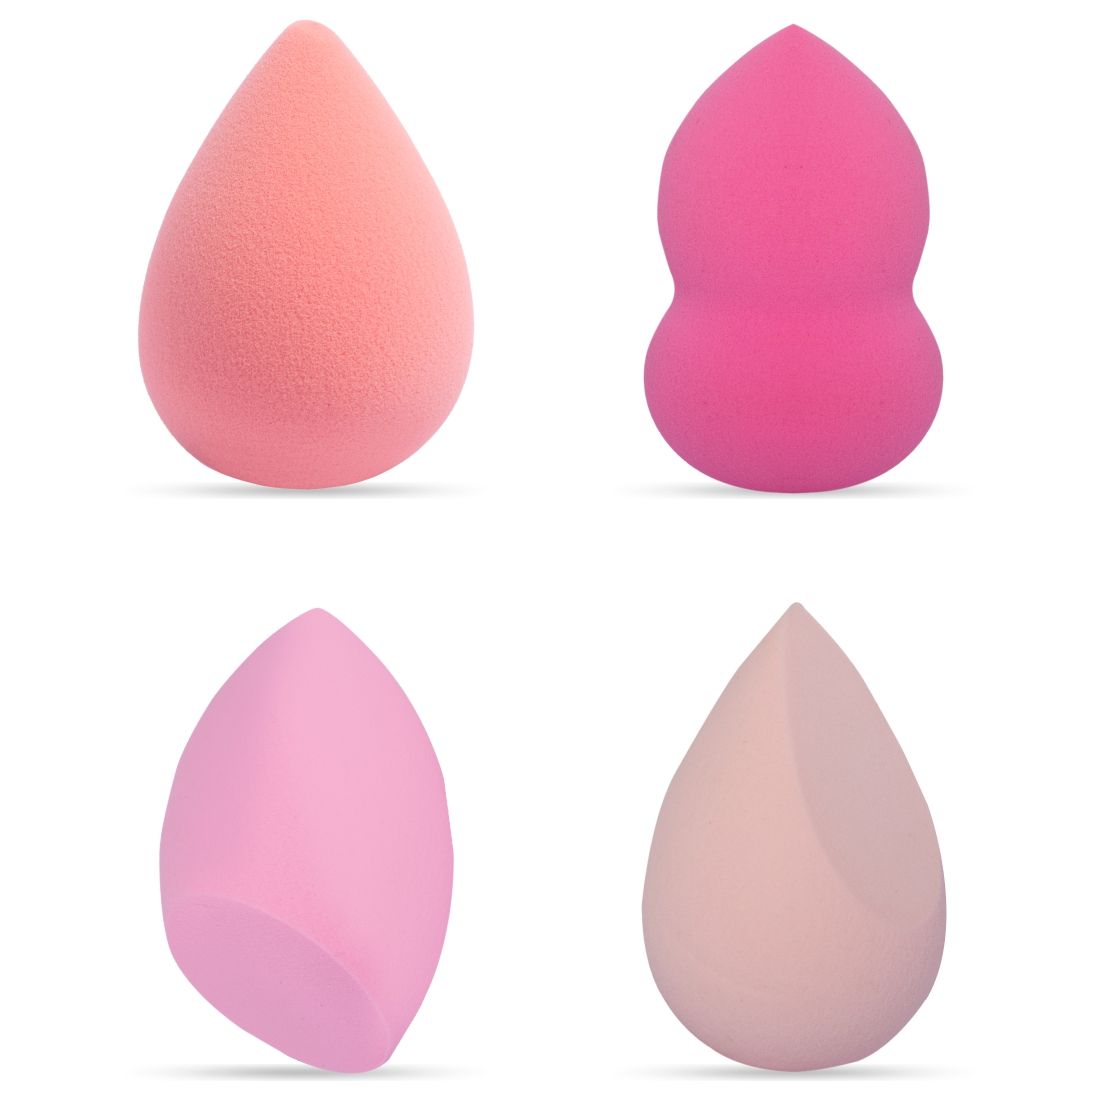 Underholde Smadre kop GUBB Beauty Blender For Face Makeup, Makeup Sponge Set of 4 - Peach & Pink